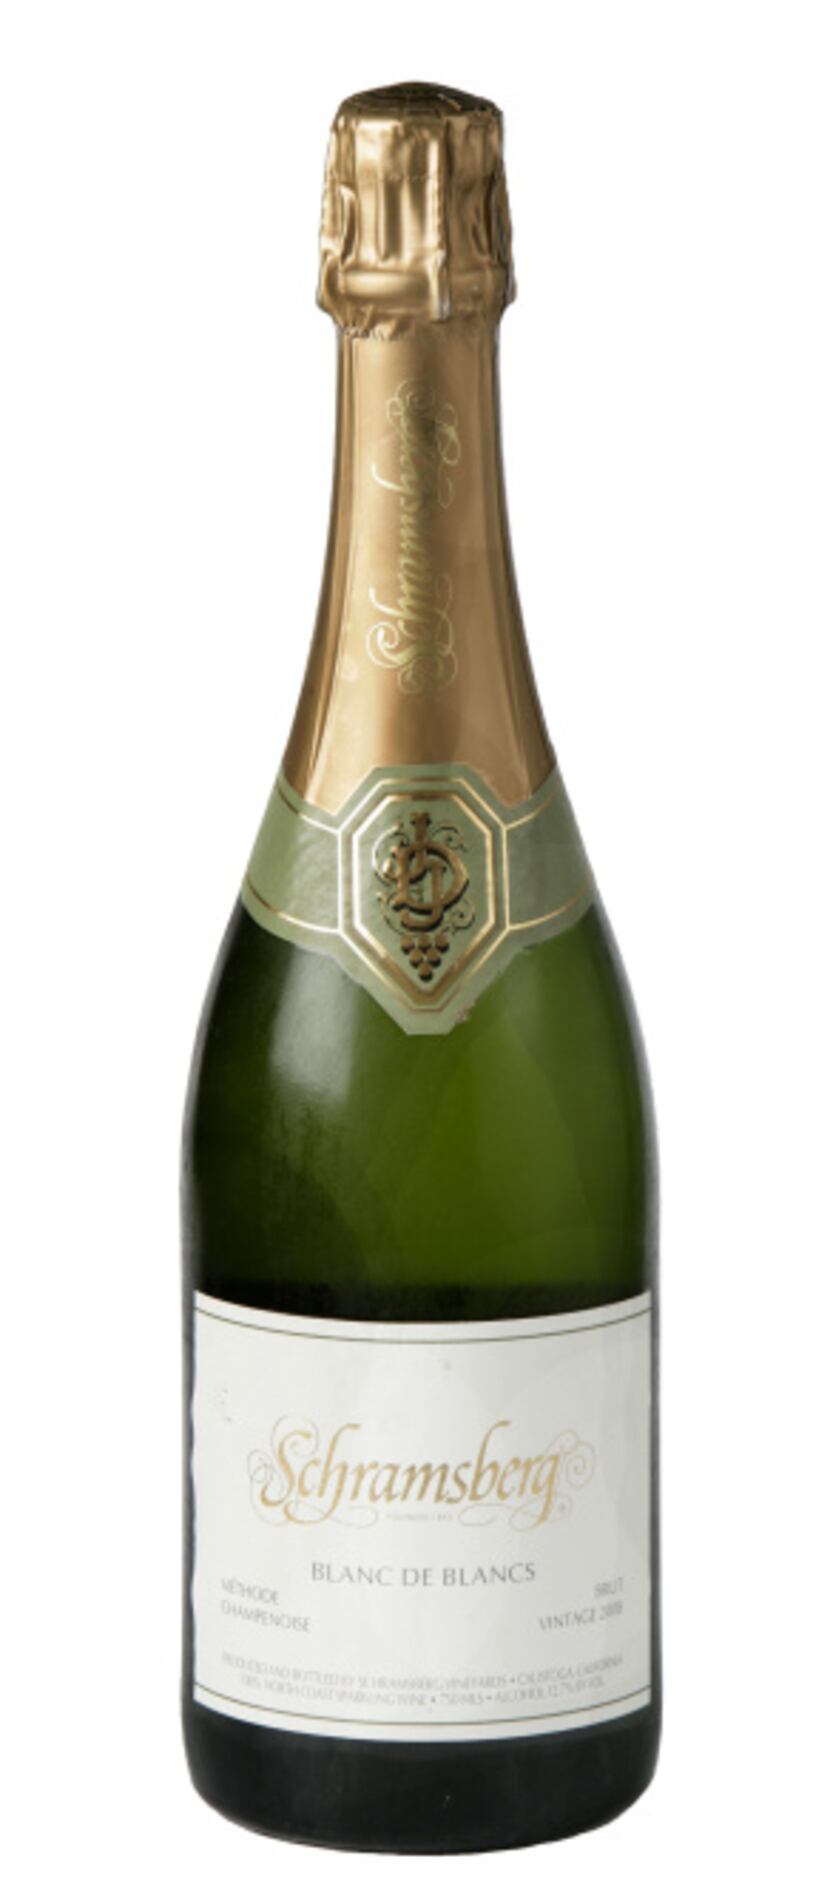 Schramsberg Blanc de Blancs Brut 2008, California. $29.99 to $31.99; Dallas Fine Wines and...